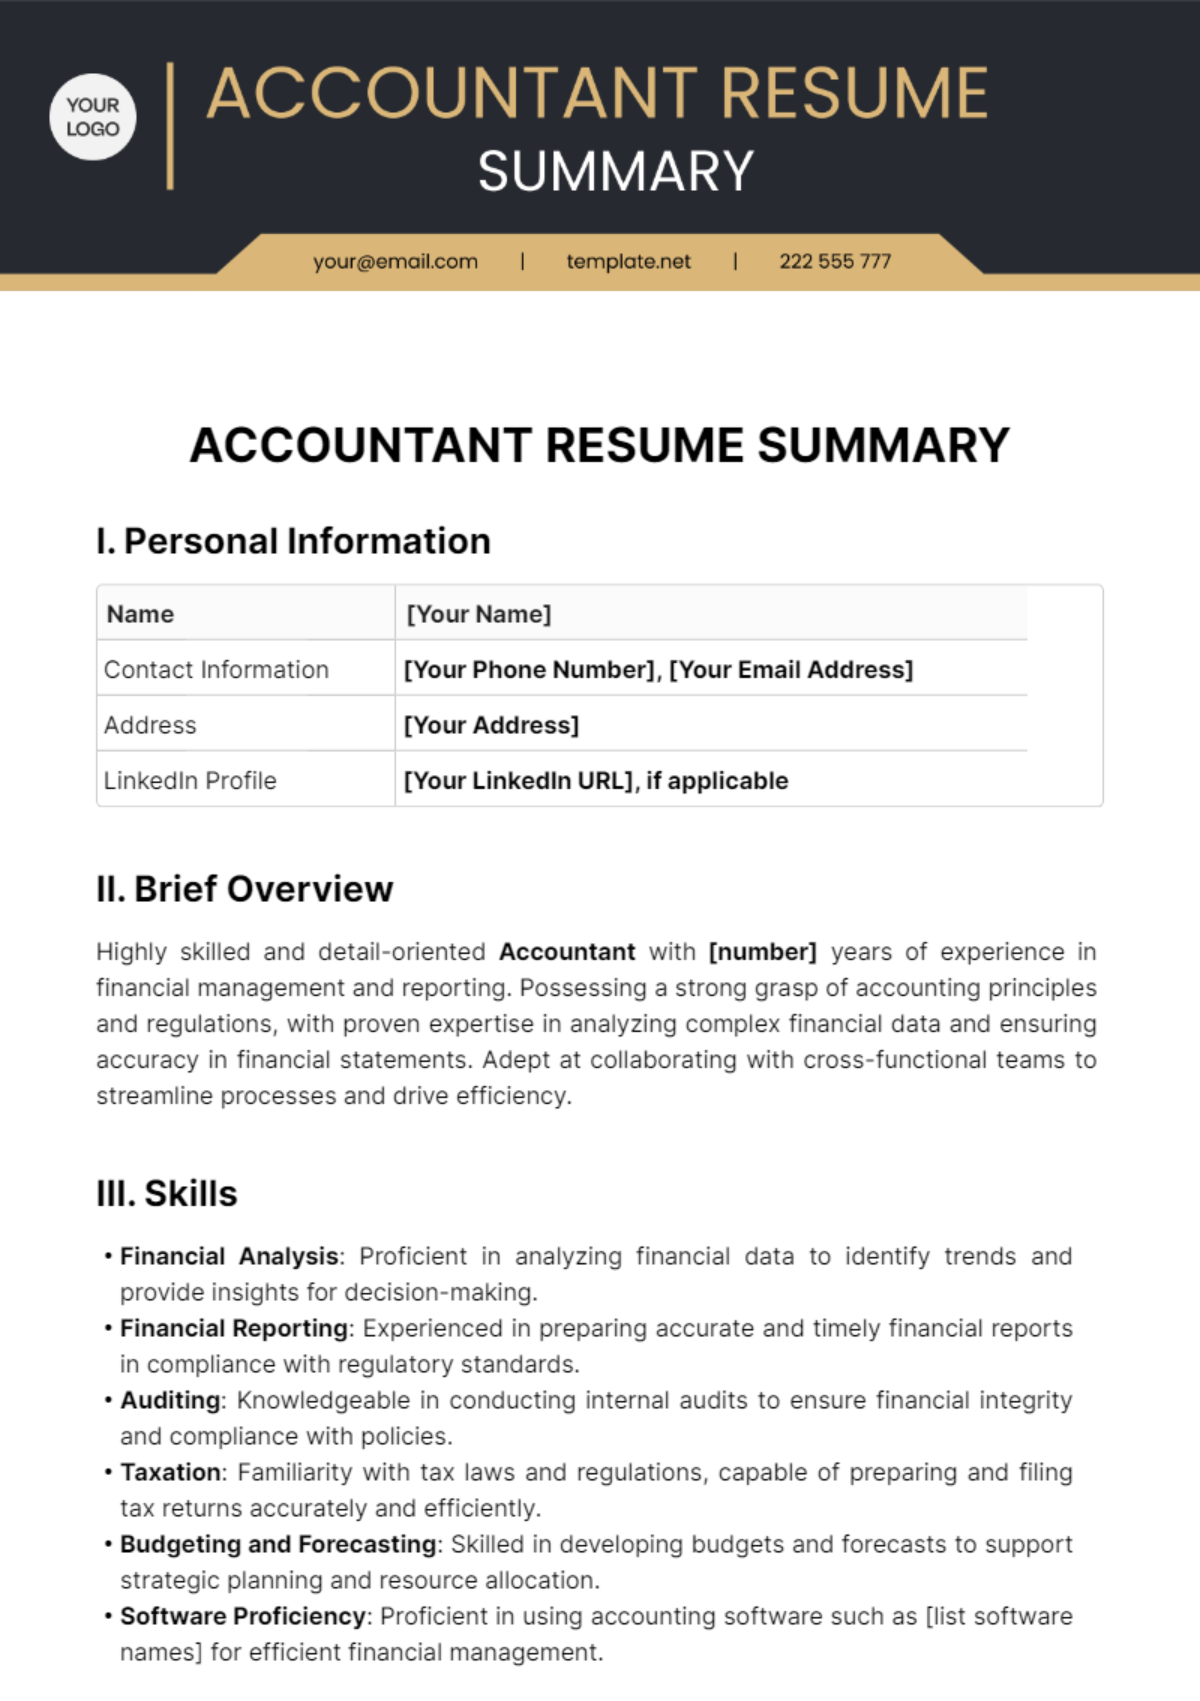 Accountant Resume Summary Template